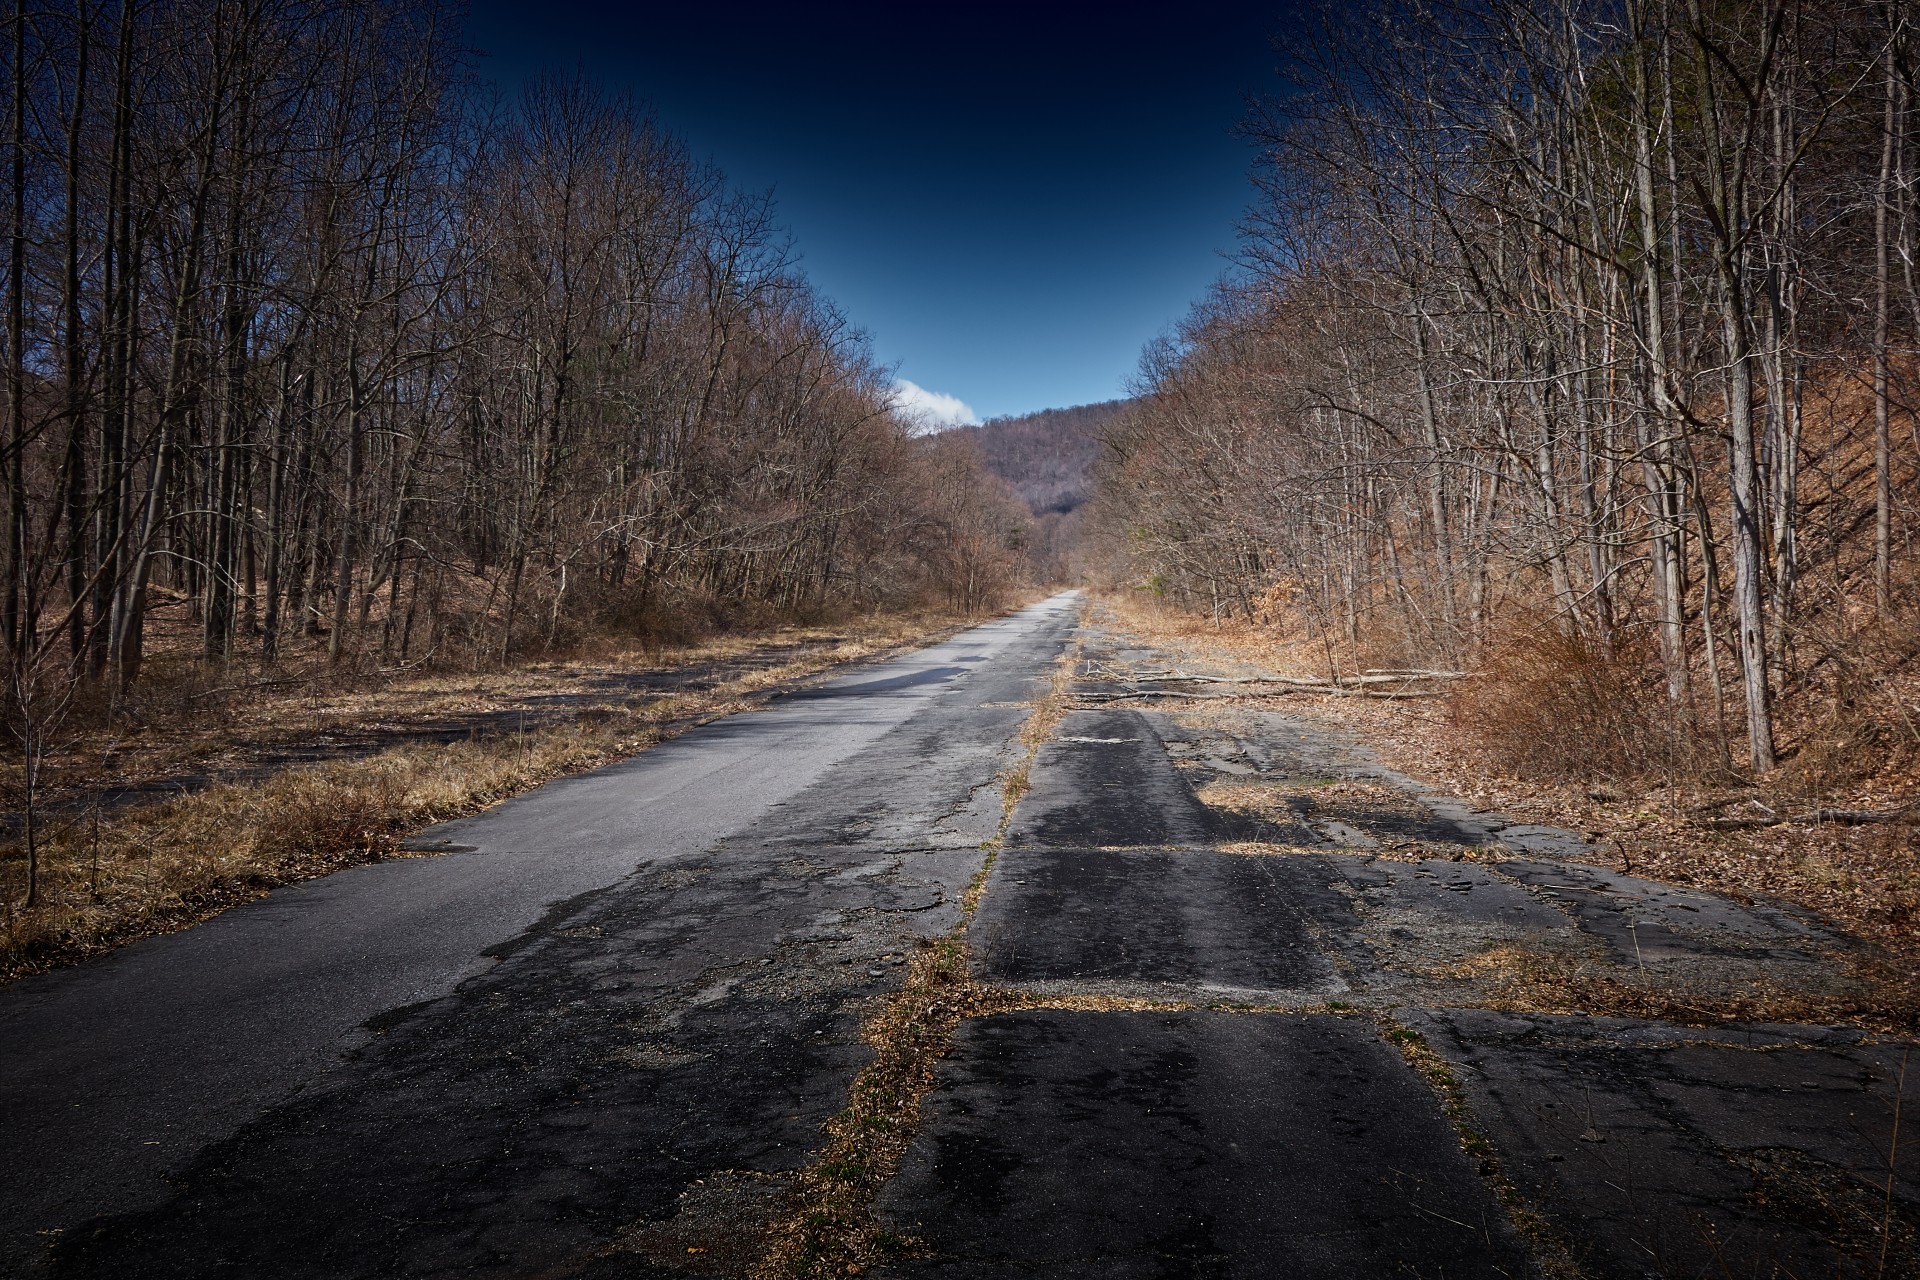 Abandoned Road